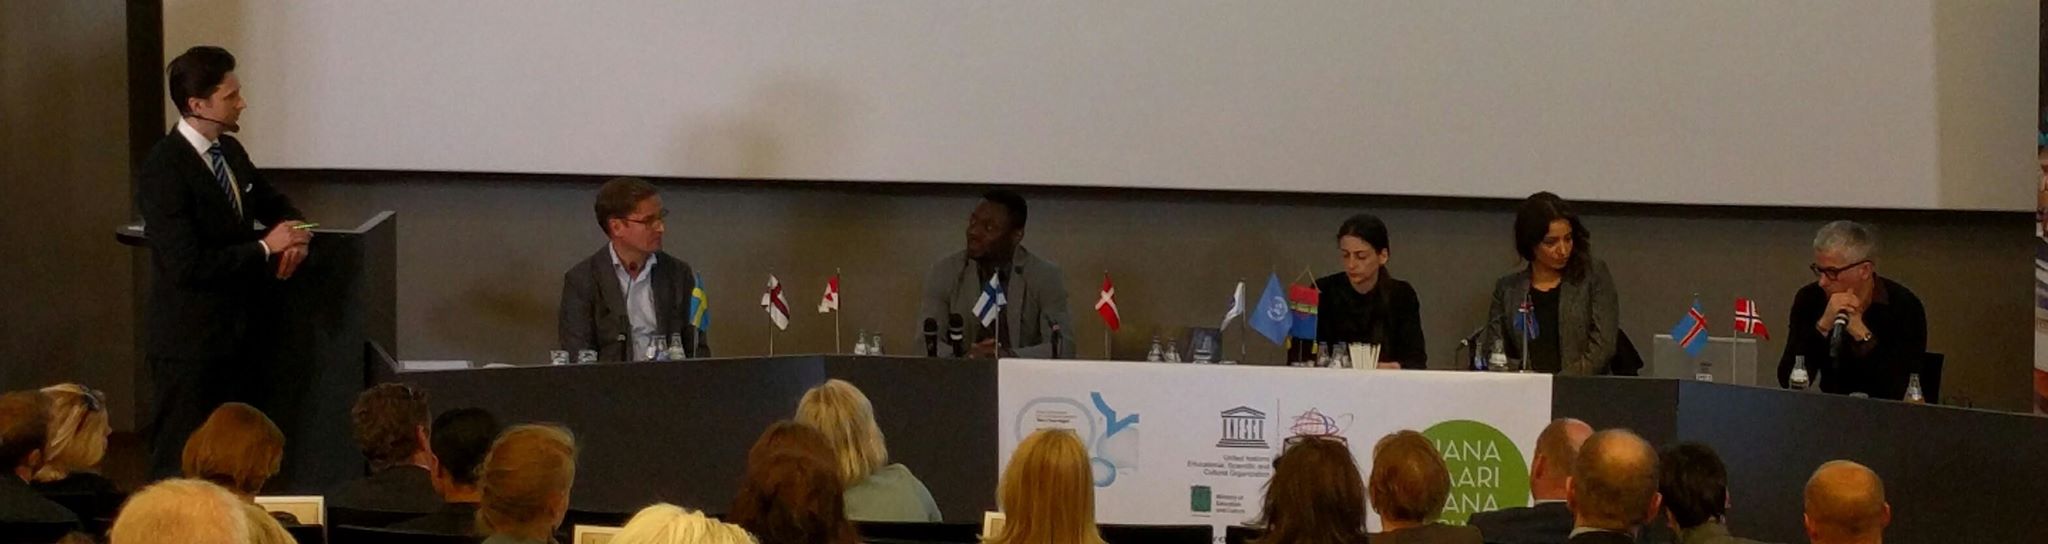 Debate at the UN World Press Freedom Day Forum in Helsinki. Photo. 